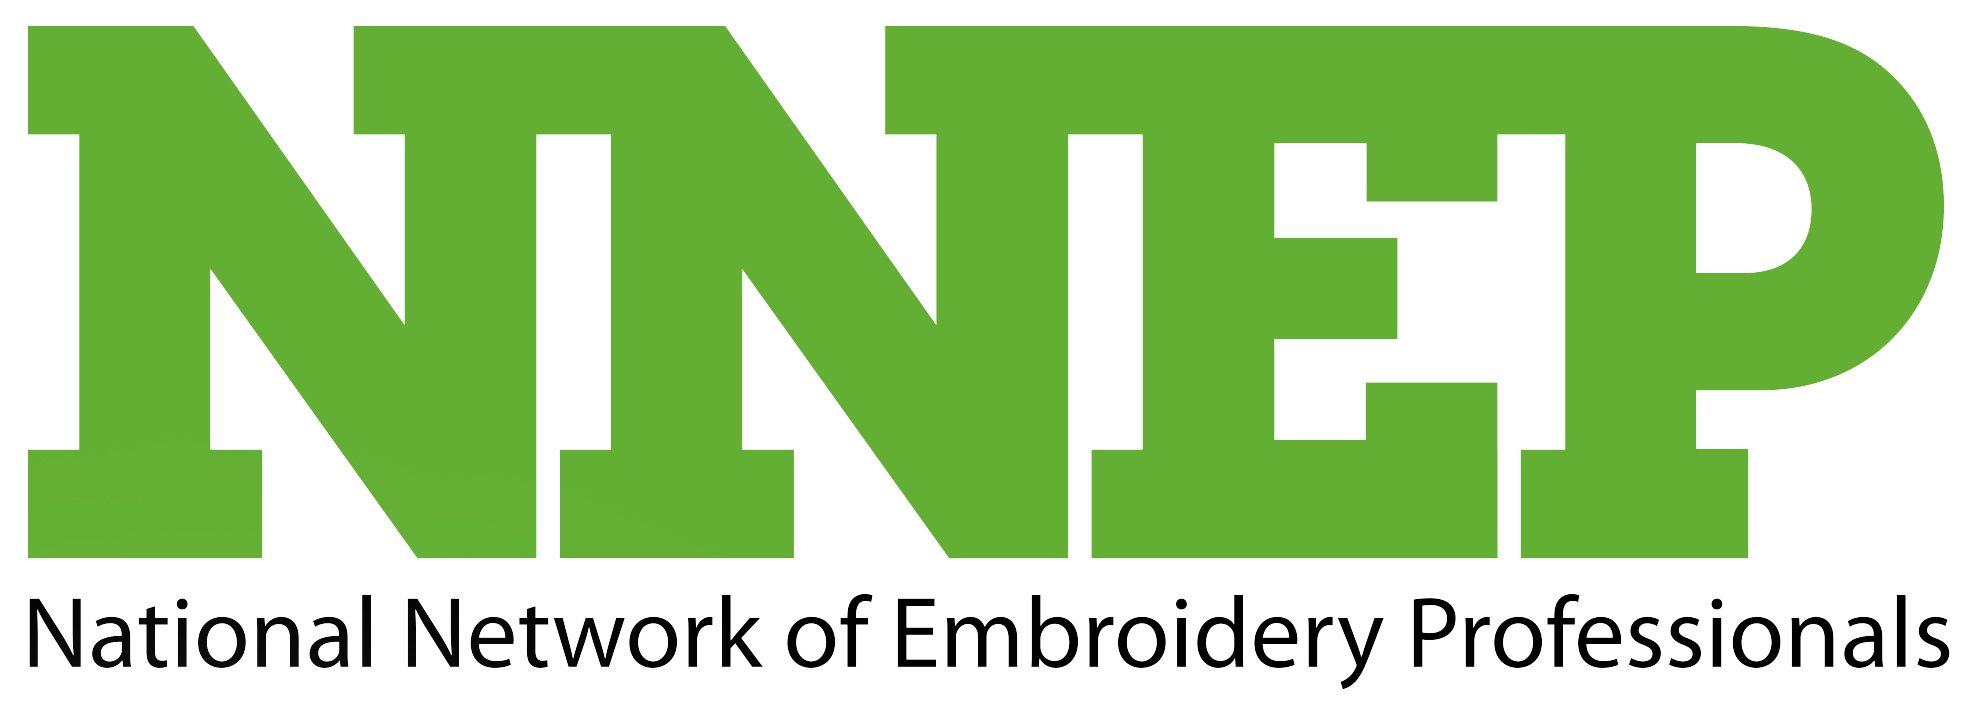 NNEP logo